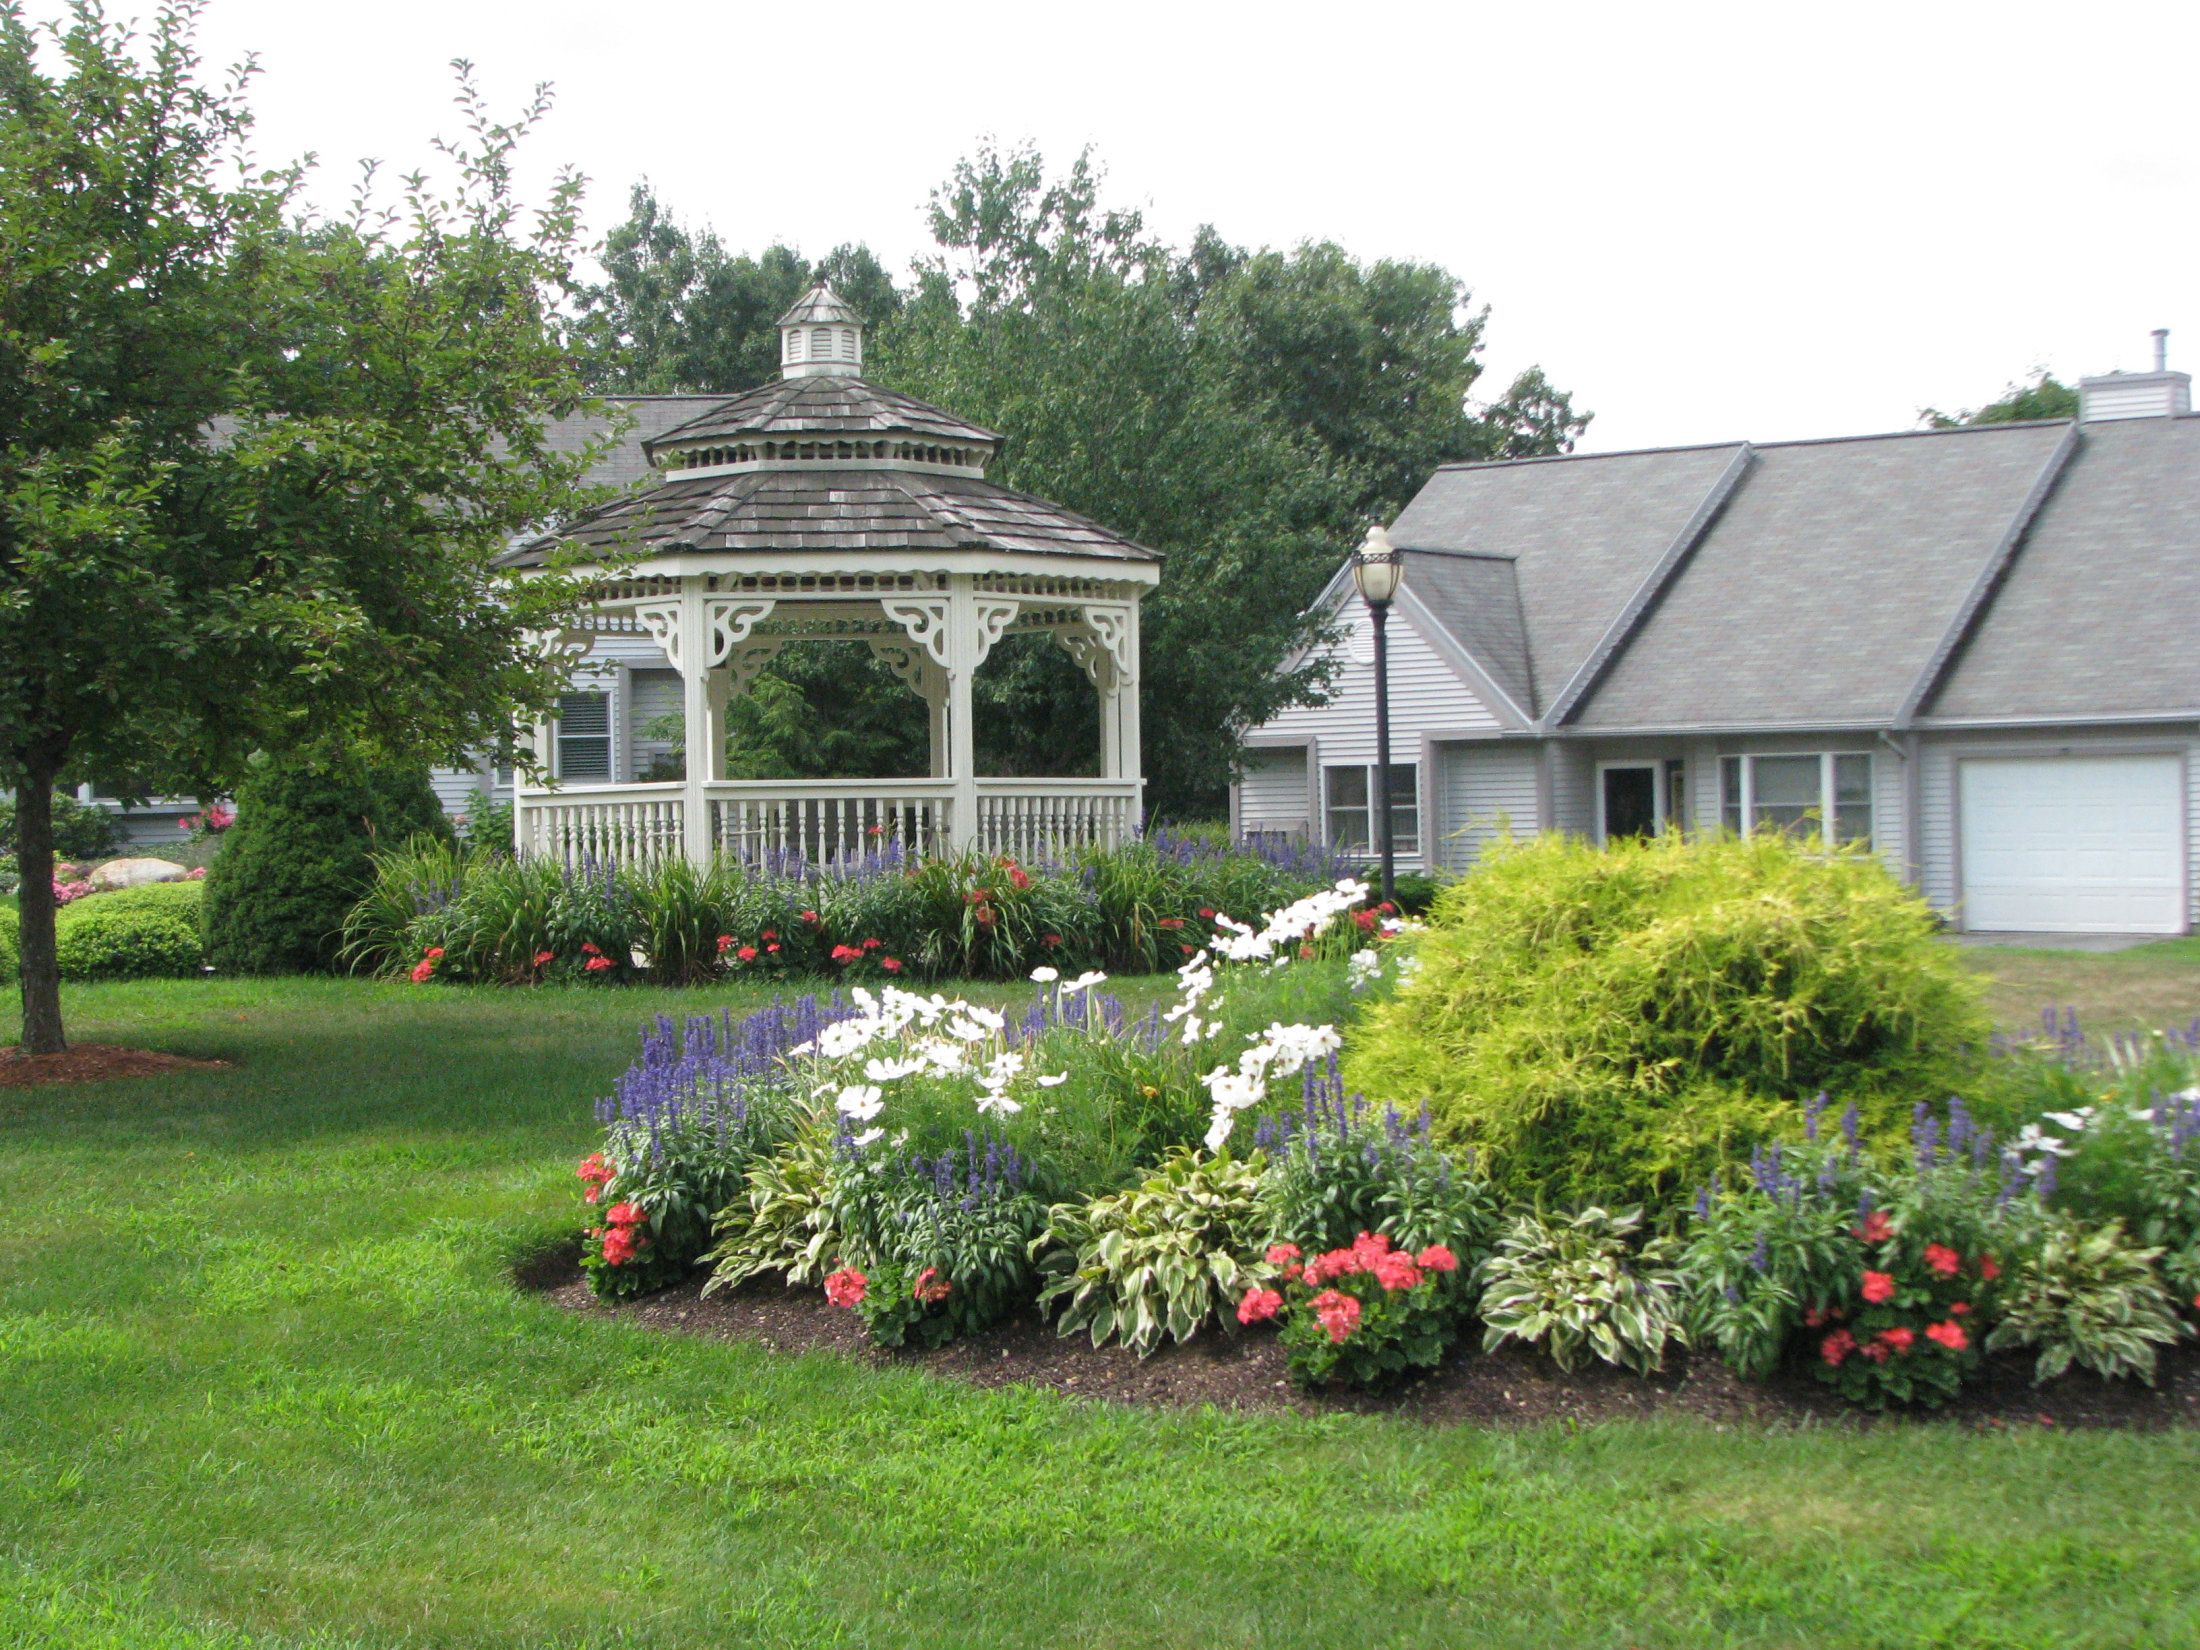 Senior living community Briarwood with lush gardens, gazebo, and beautiful architecture.